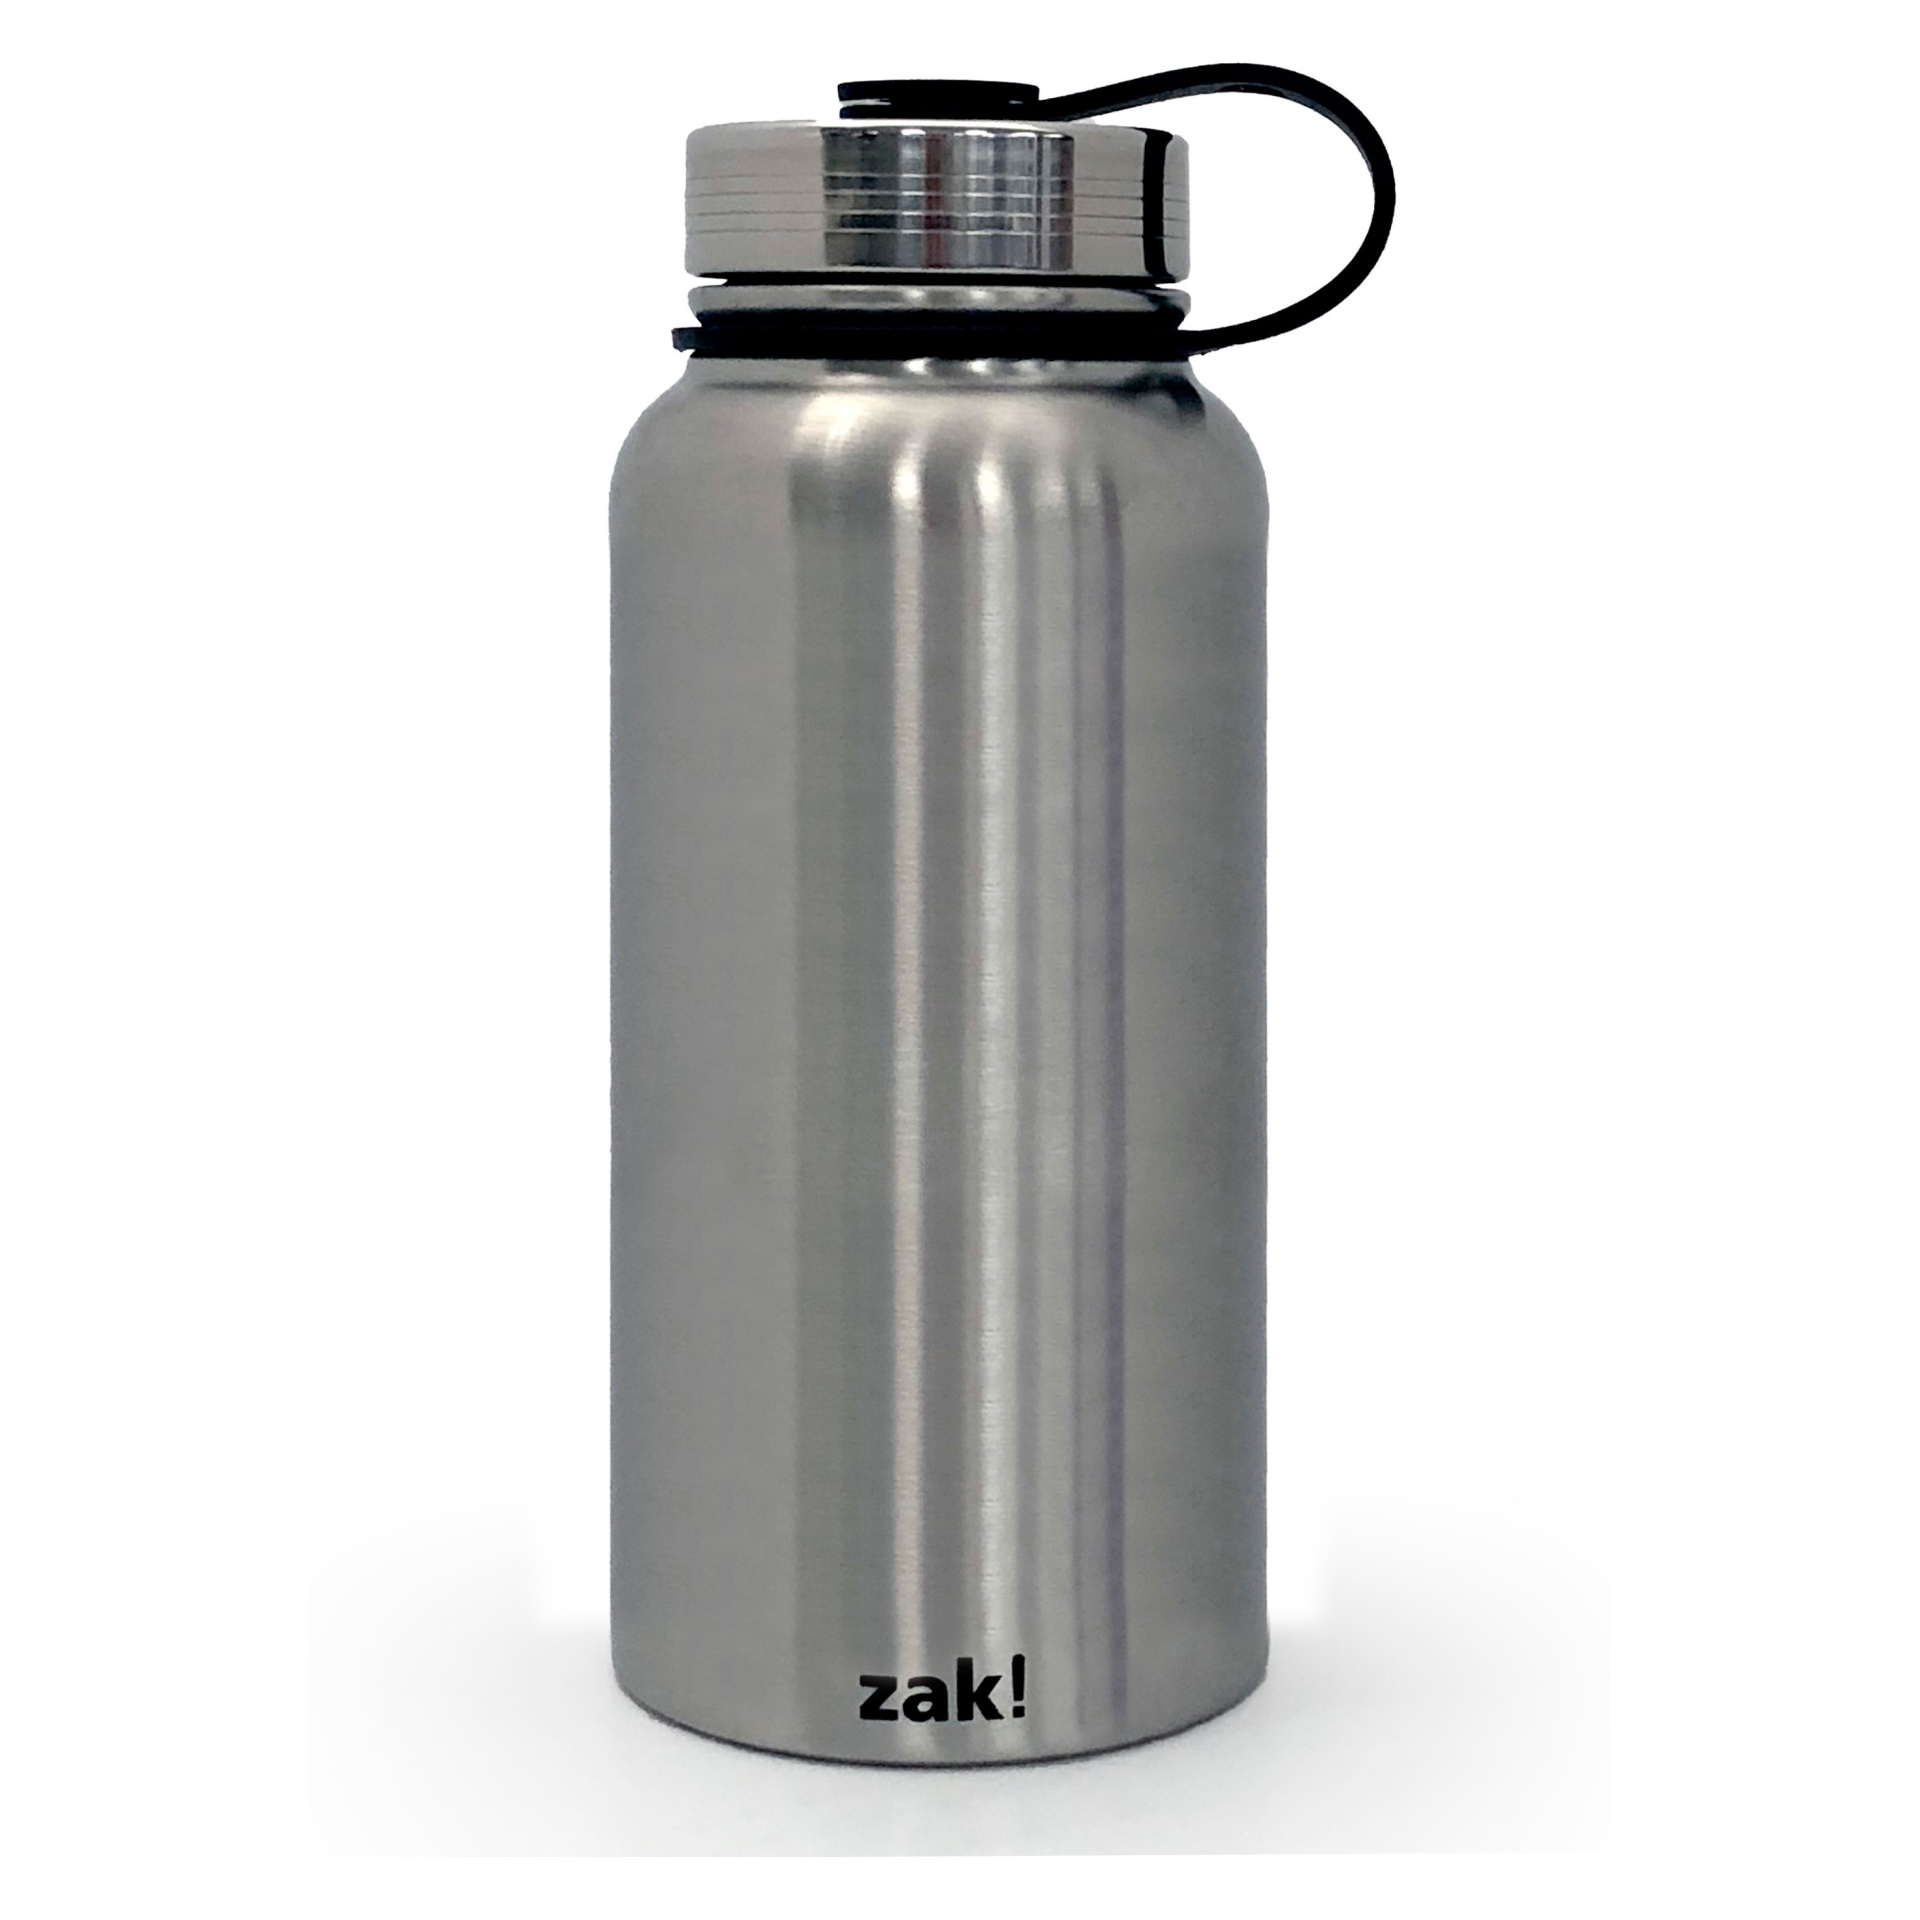 Zak! Designs Stainless Steel Water Bottle - Silver 32 oz